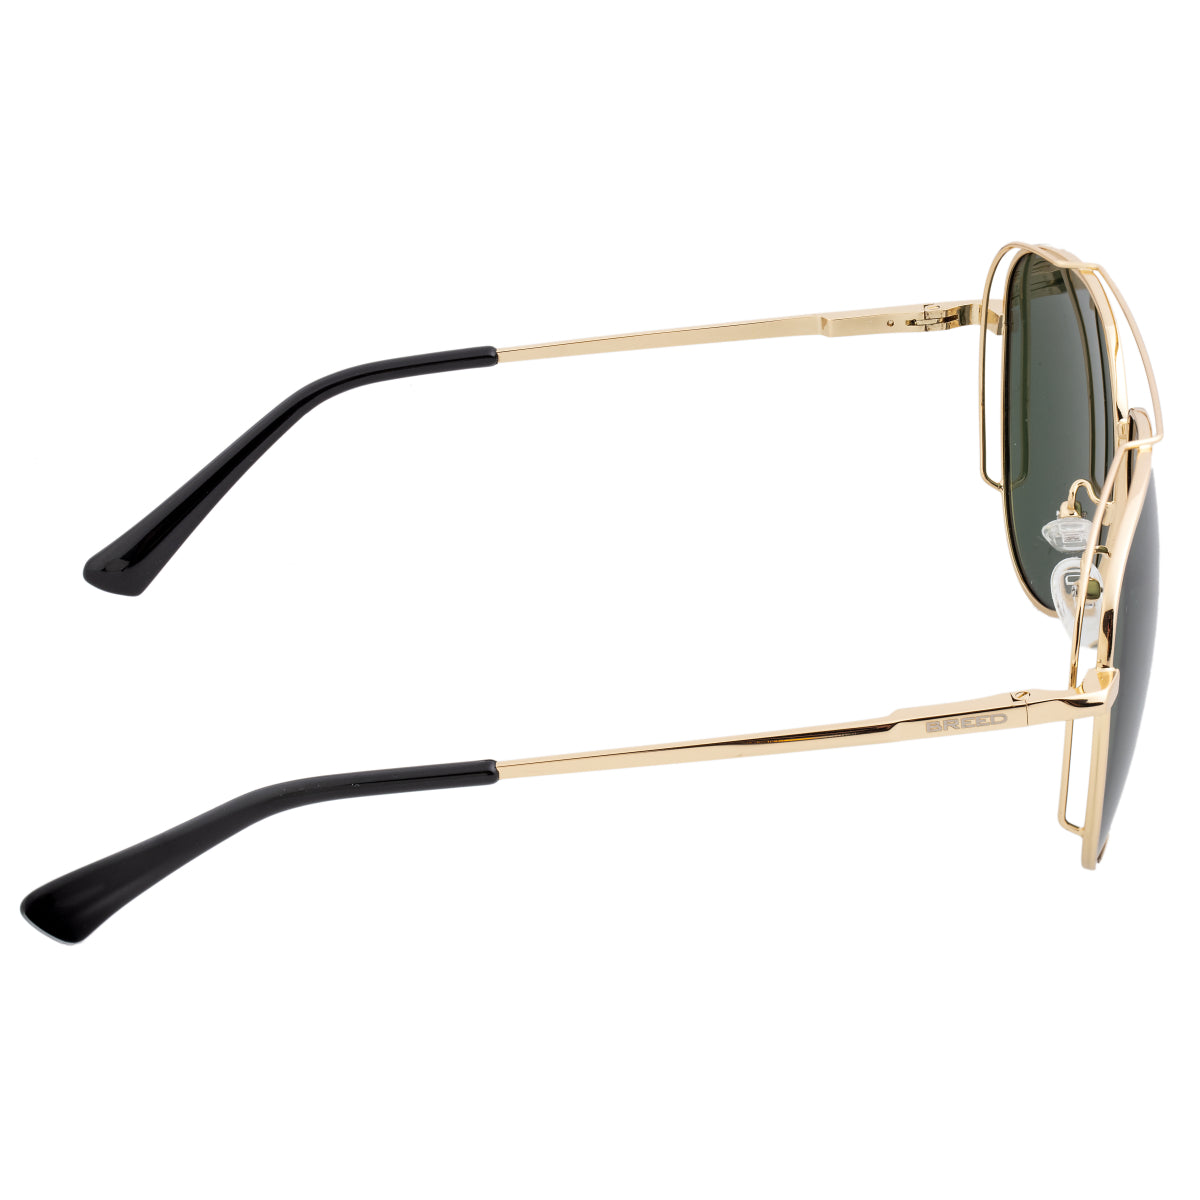 Breed Lyra Polarized Sunglasses - Gold/Black - BSG061GD